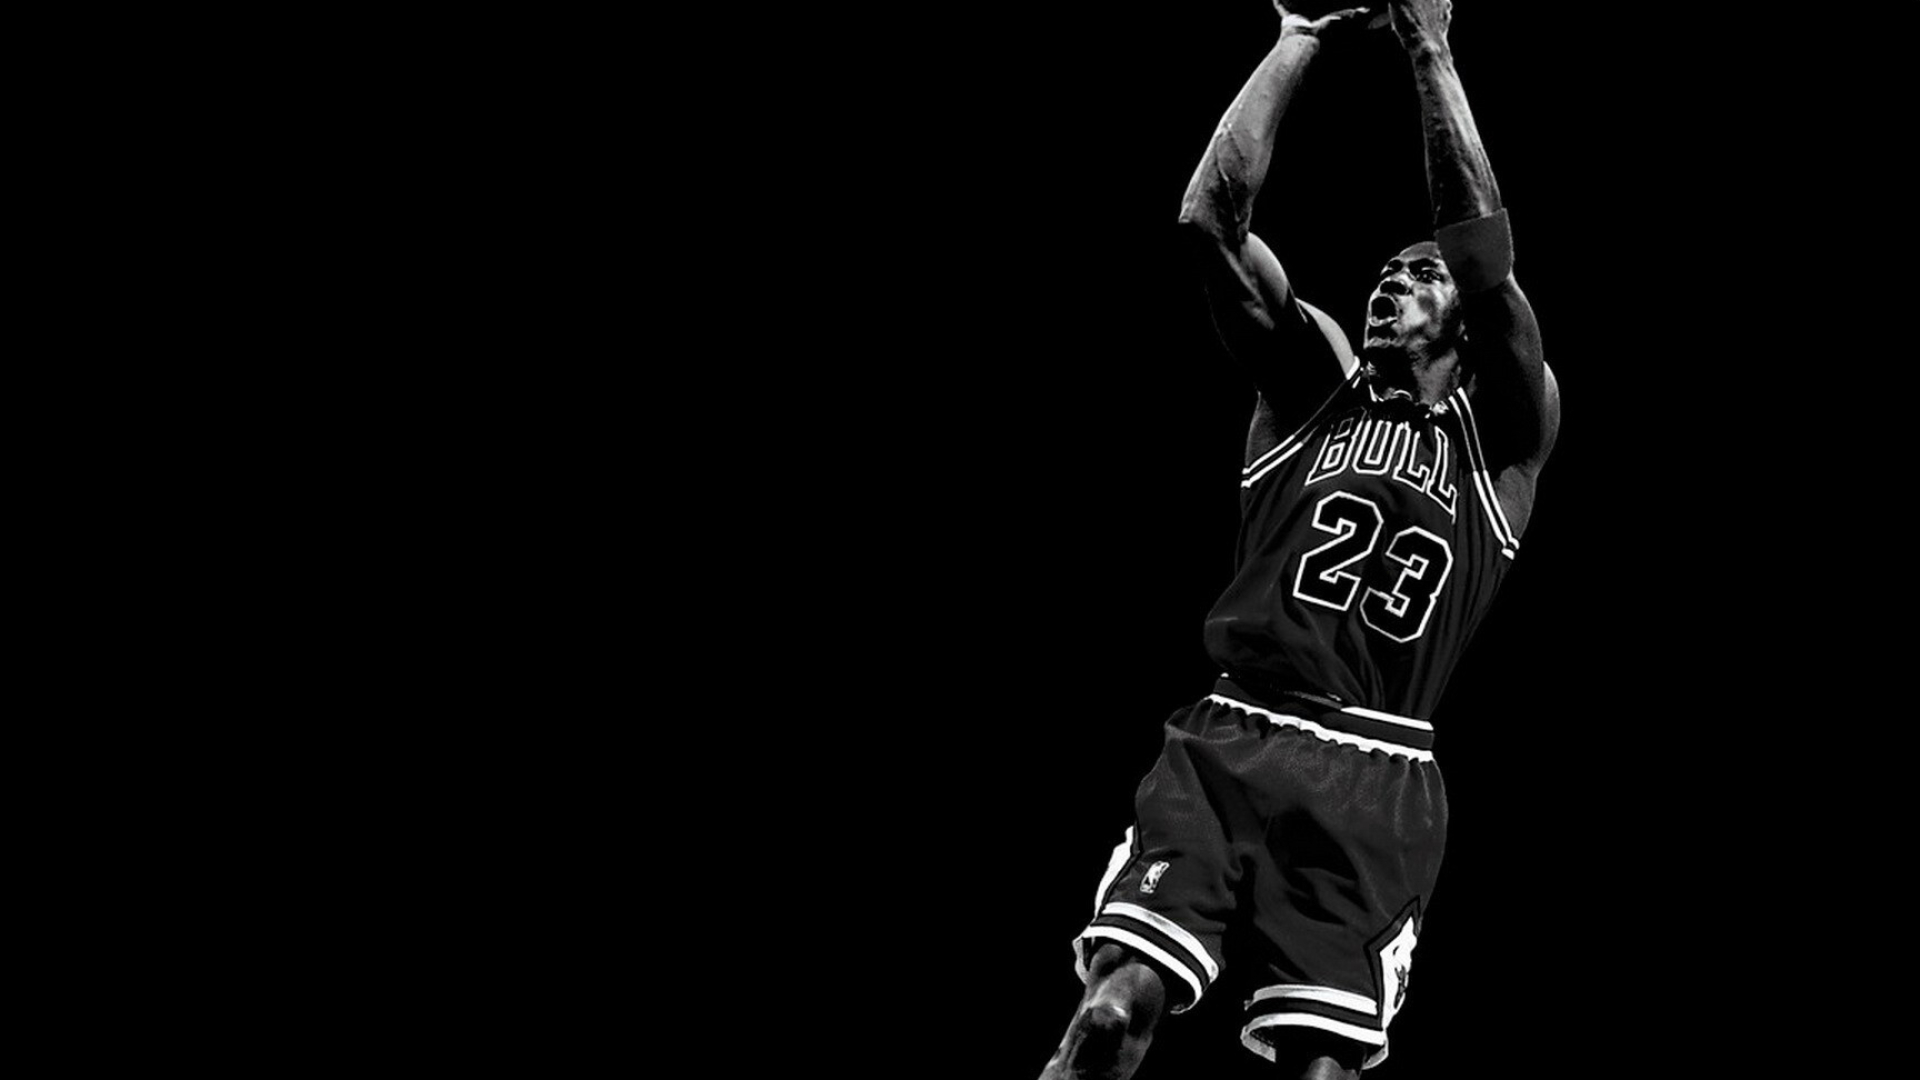 Michael Jordan: Announced his retirement from NBA on October 6, 1993, His Airness. 1920x1080 Full HD Wallpaper.